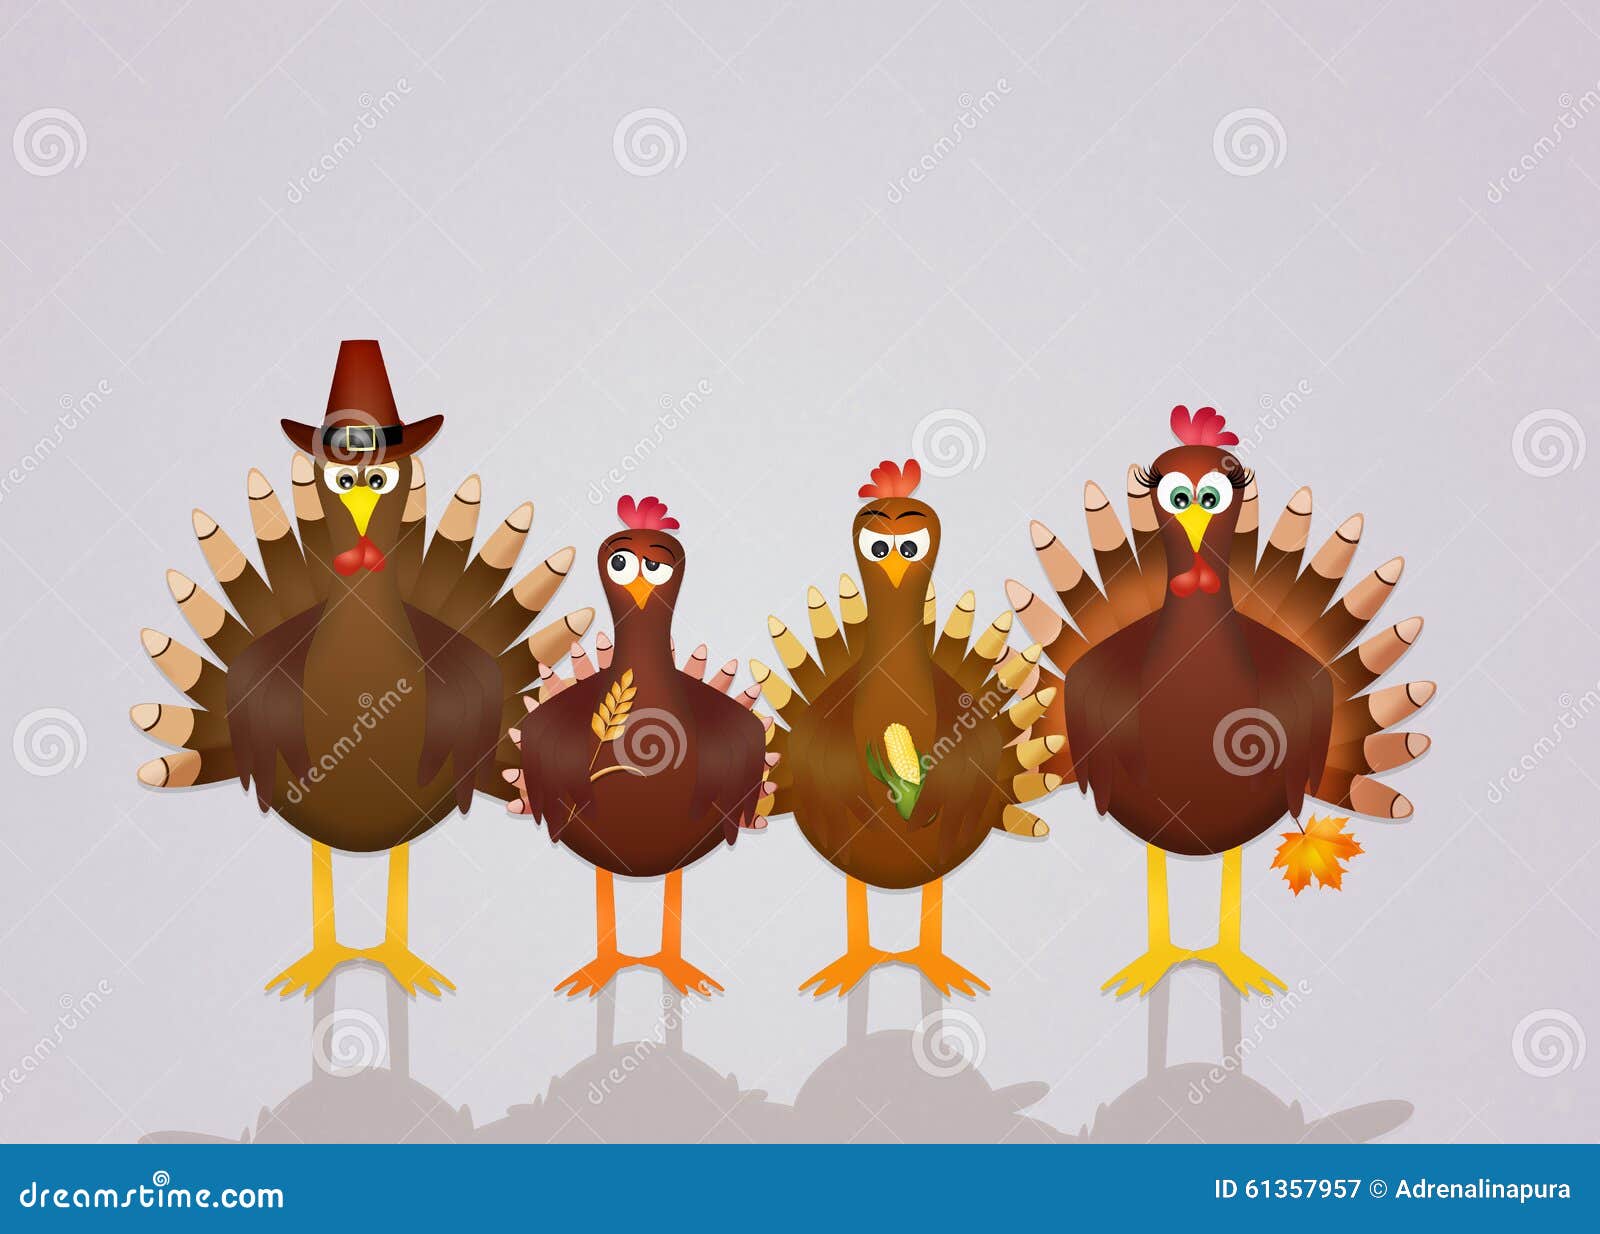 Family of turkeys stock illustration. Illustration of harvest - 61357957